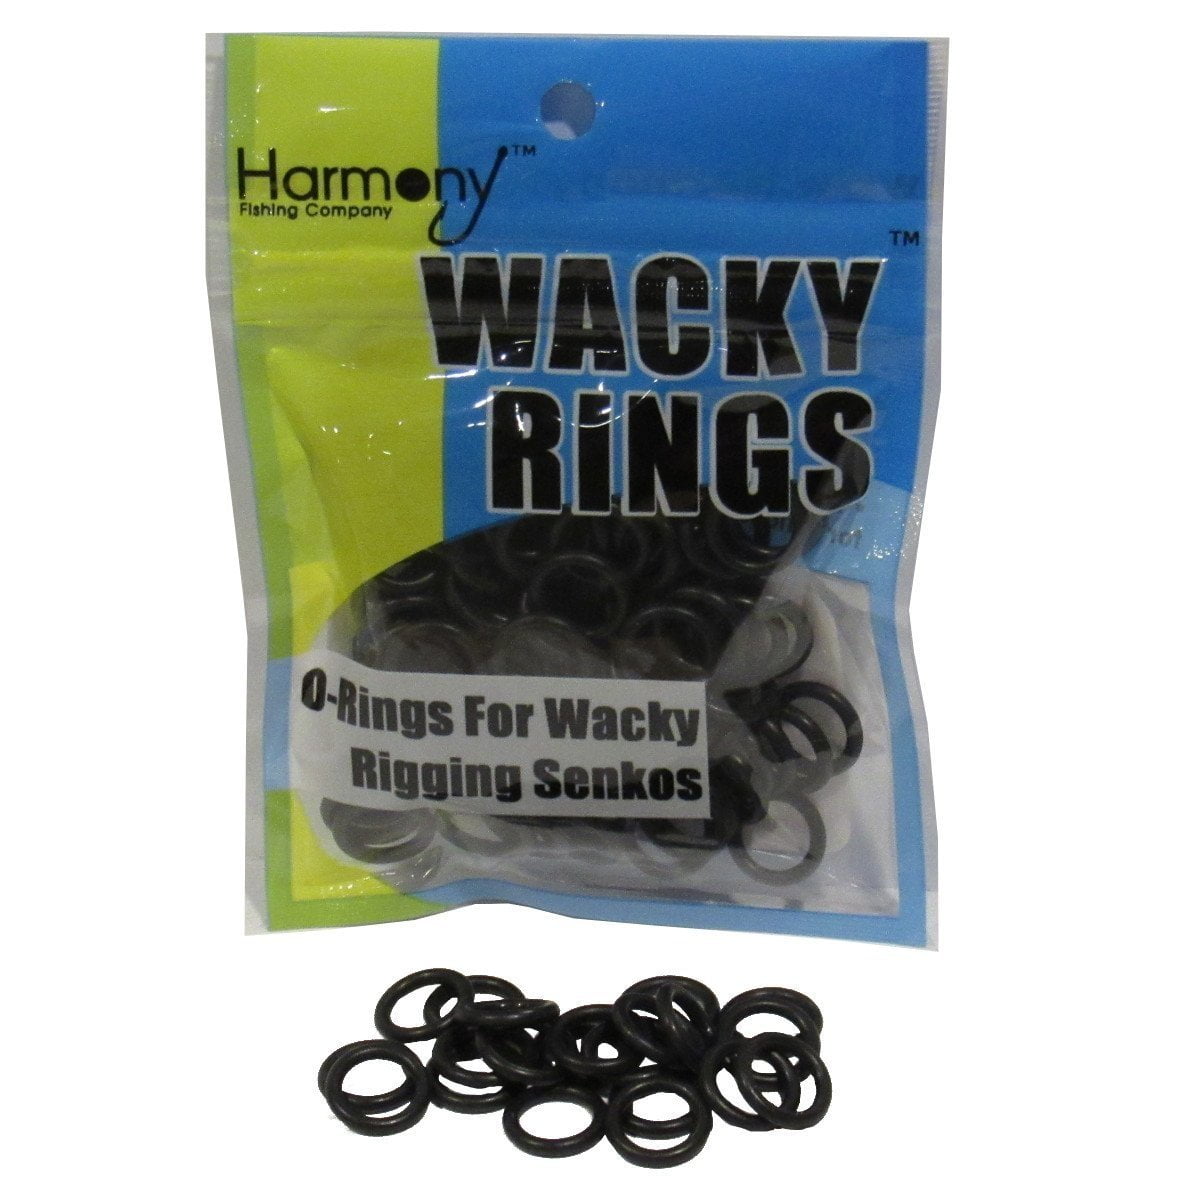 Wacky Rings - O-Rings for Wacky Rigging Senko Worms 100 orings